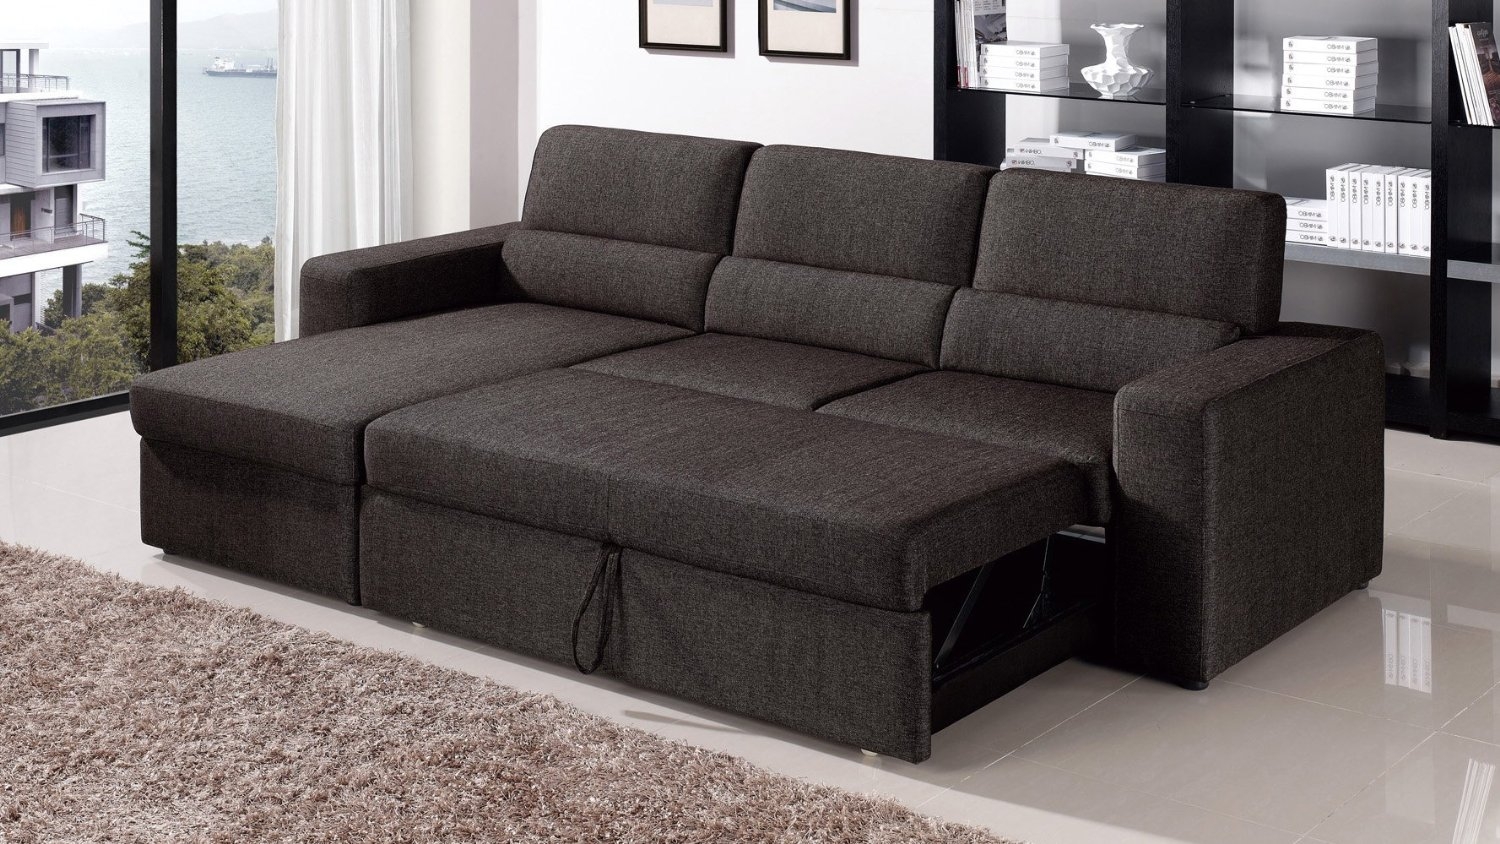 sectional sleeper sofa with storage photo - 1